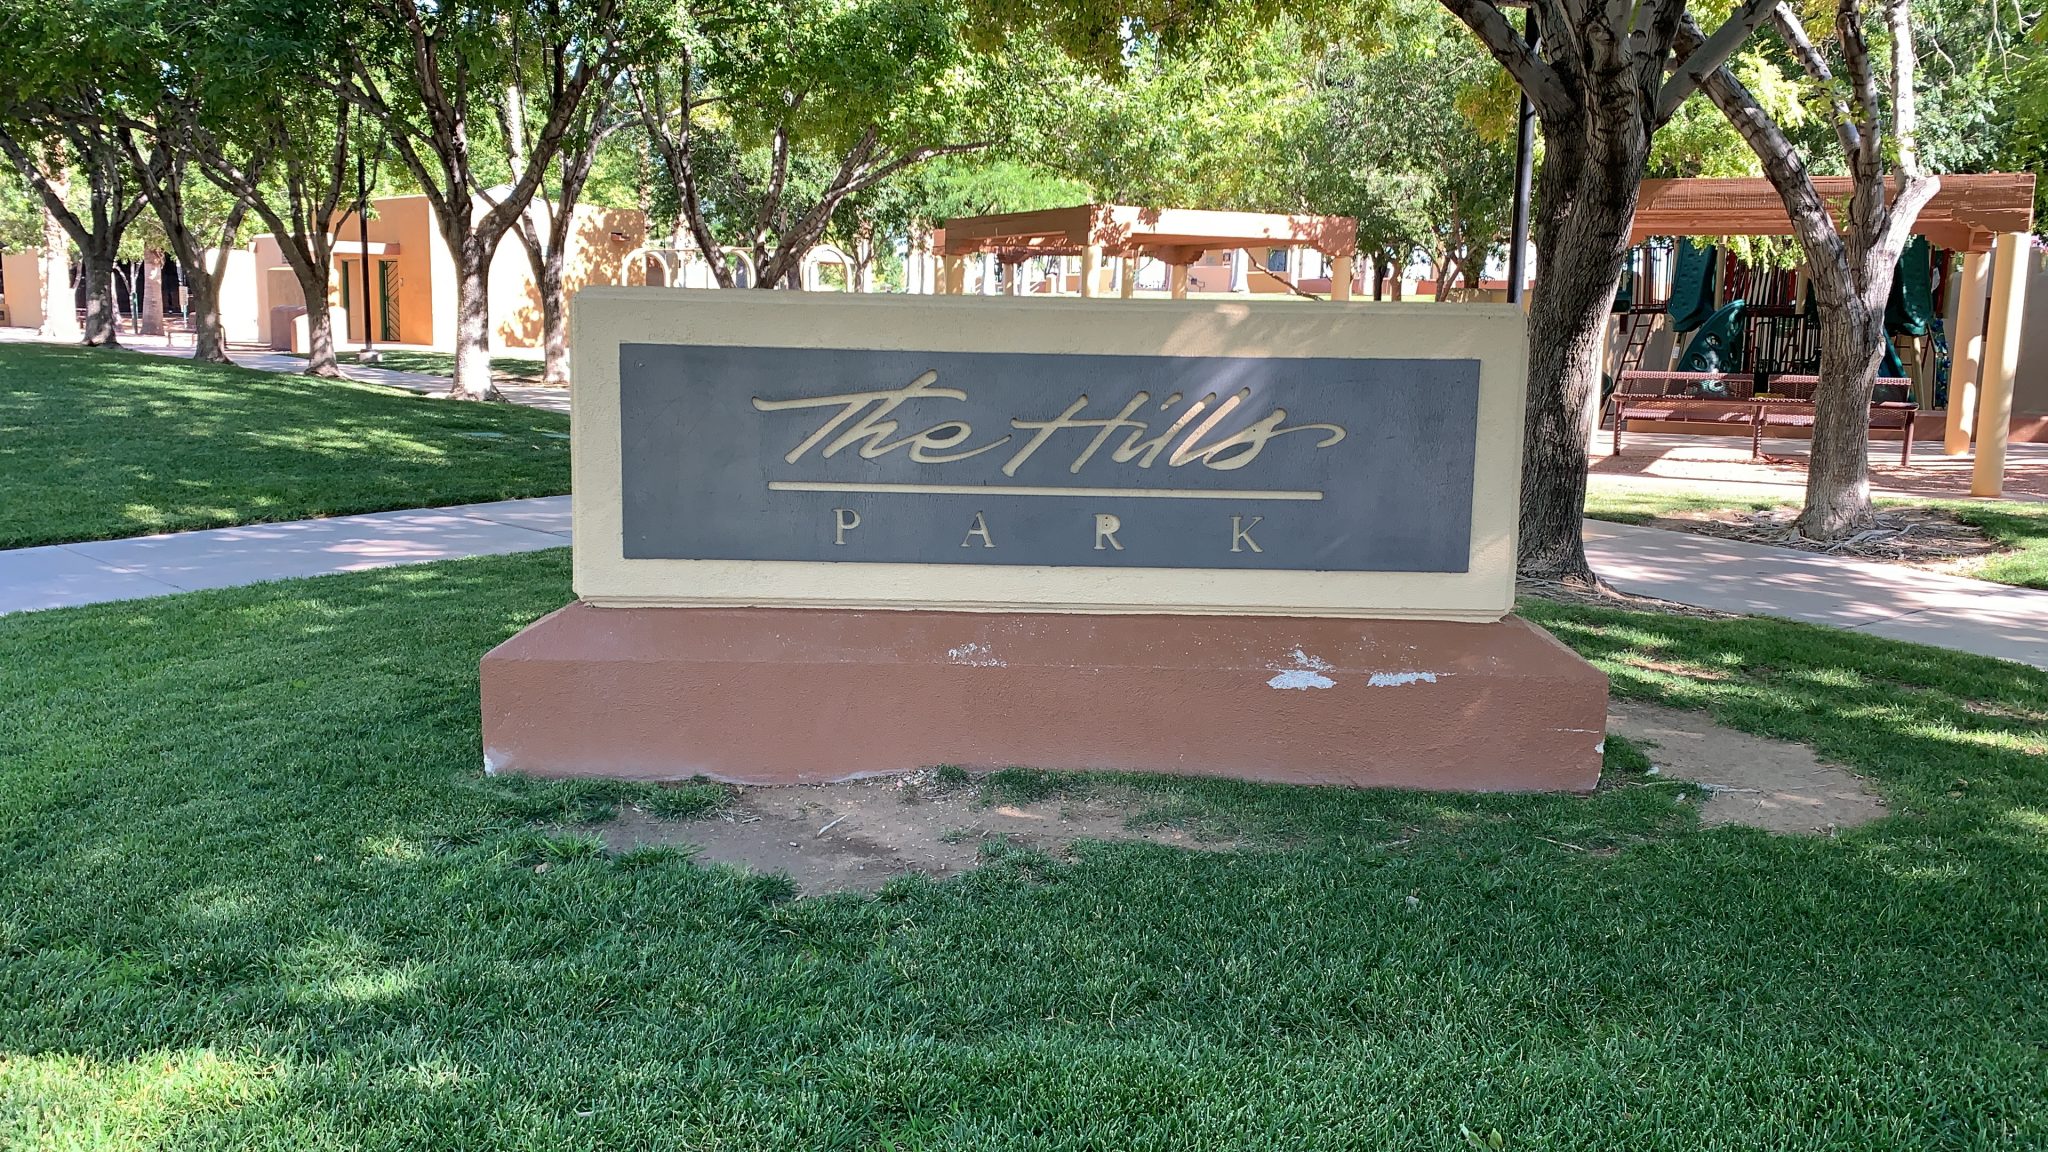 The Hills Park